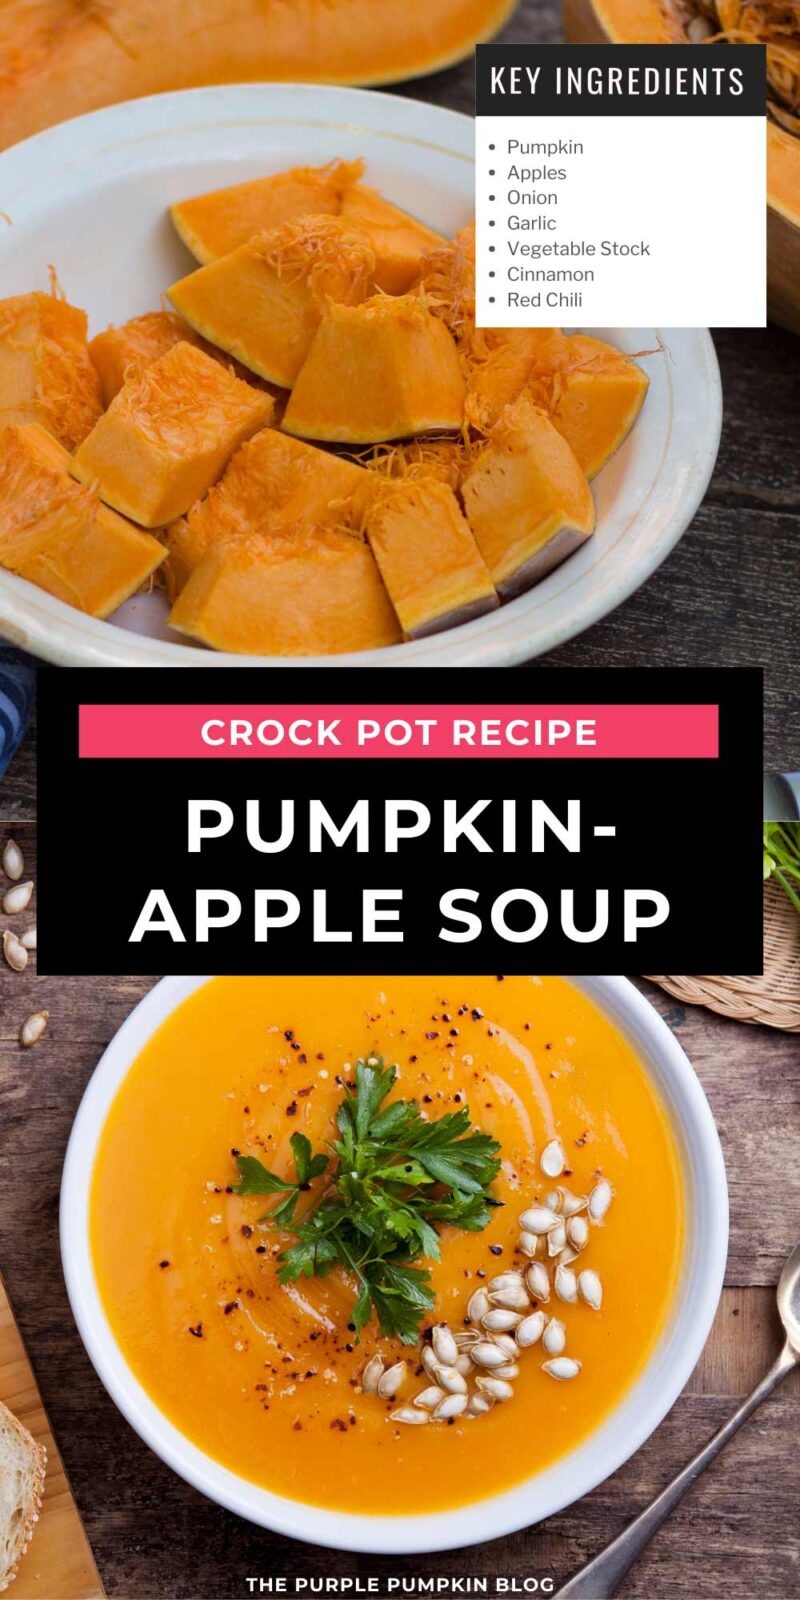 Crock Pot Recipe Pumpkin-Apple Soup Recipe Ingredients